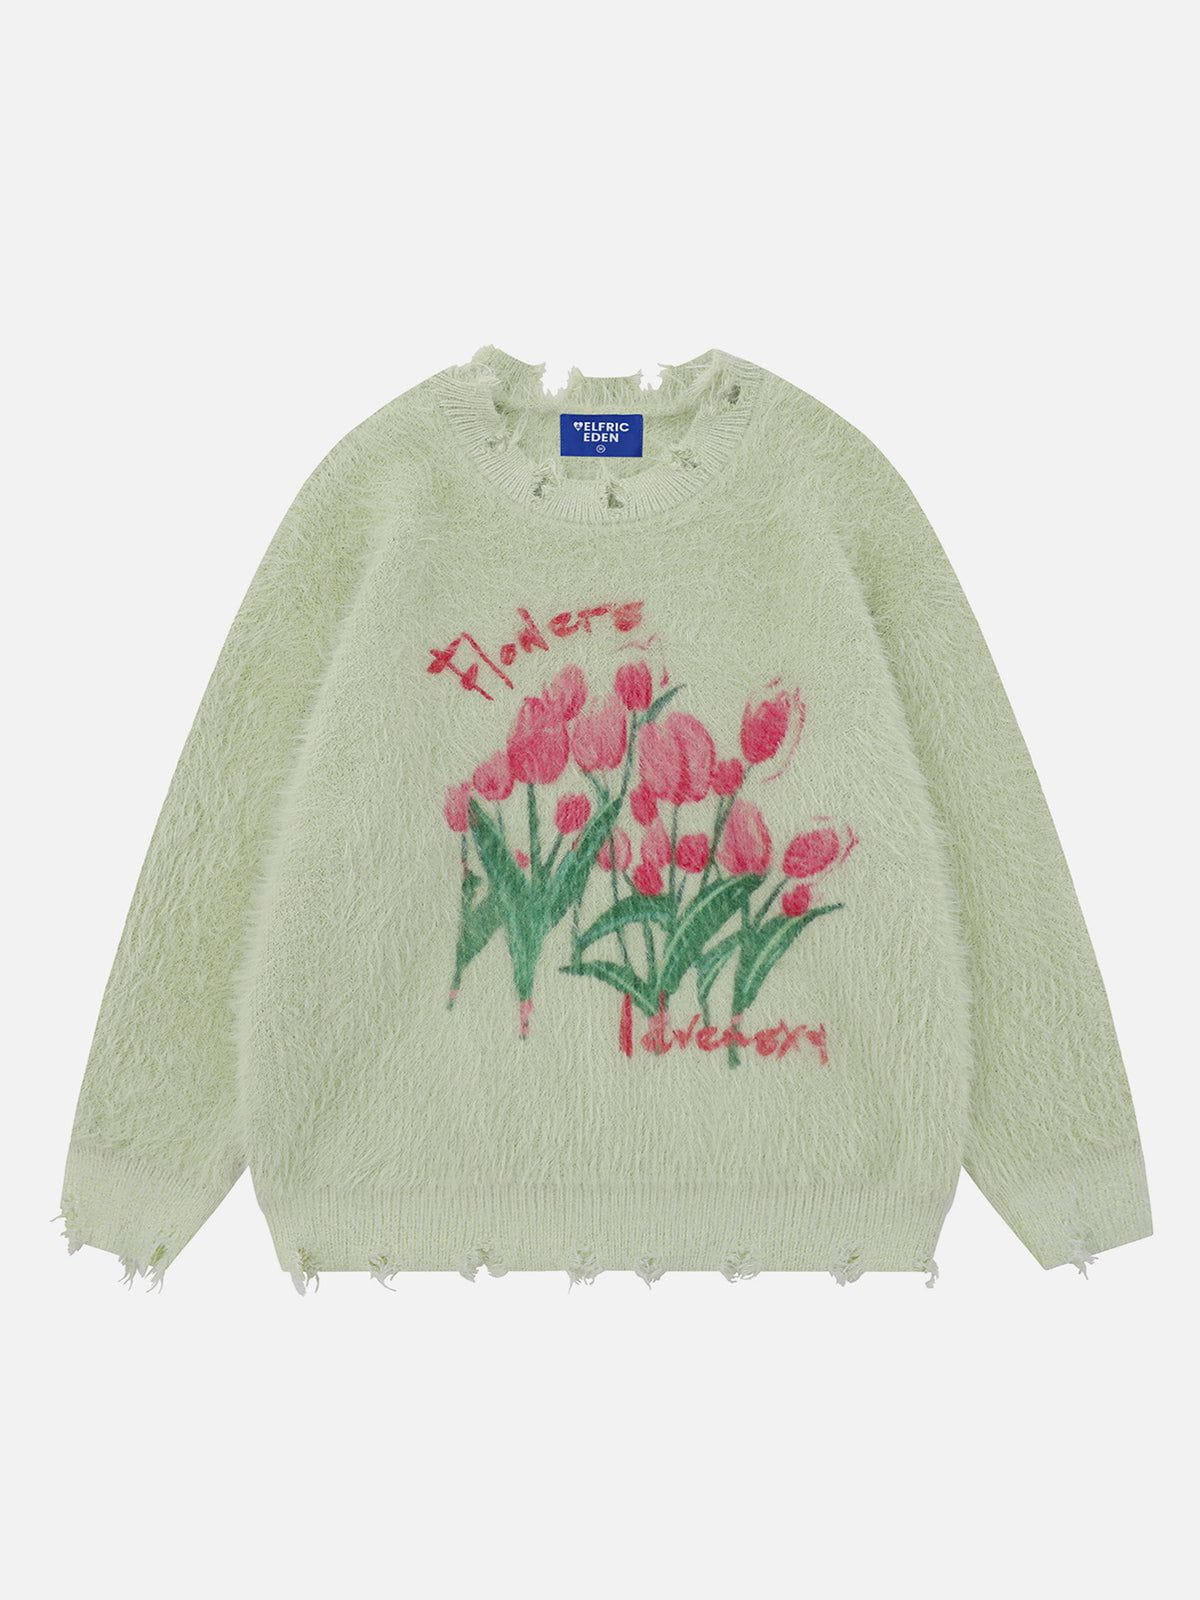 Aelfric Eden Distressed Flower Sweater